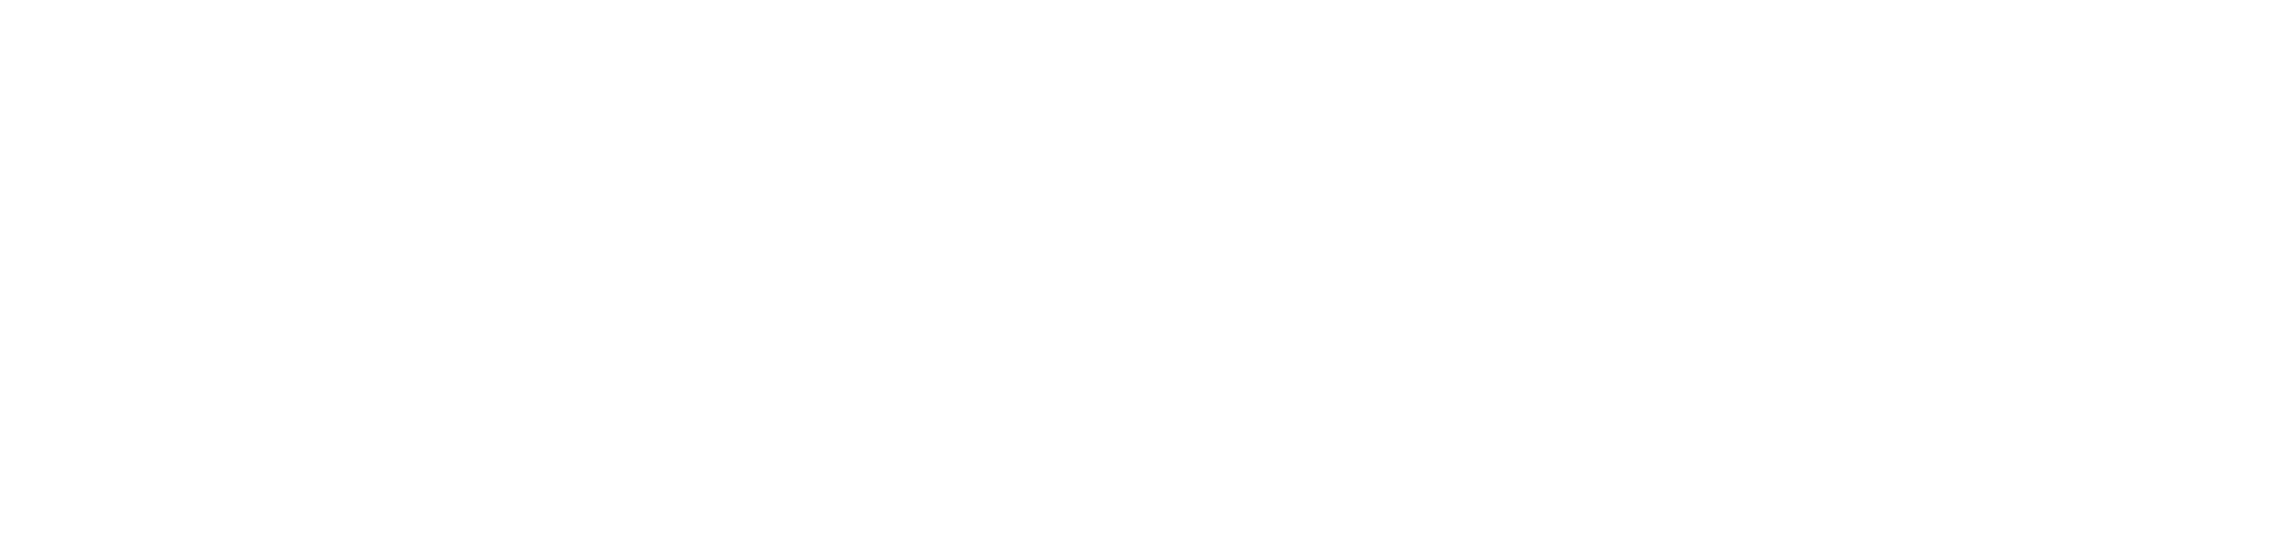 Logotipo Wyndham Pettra blanco